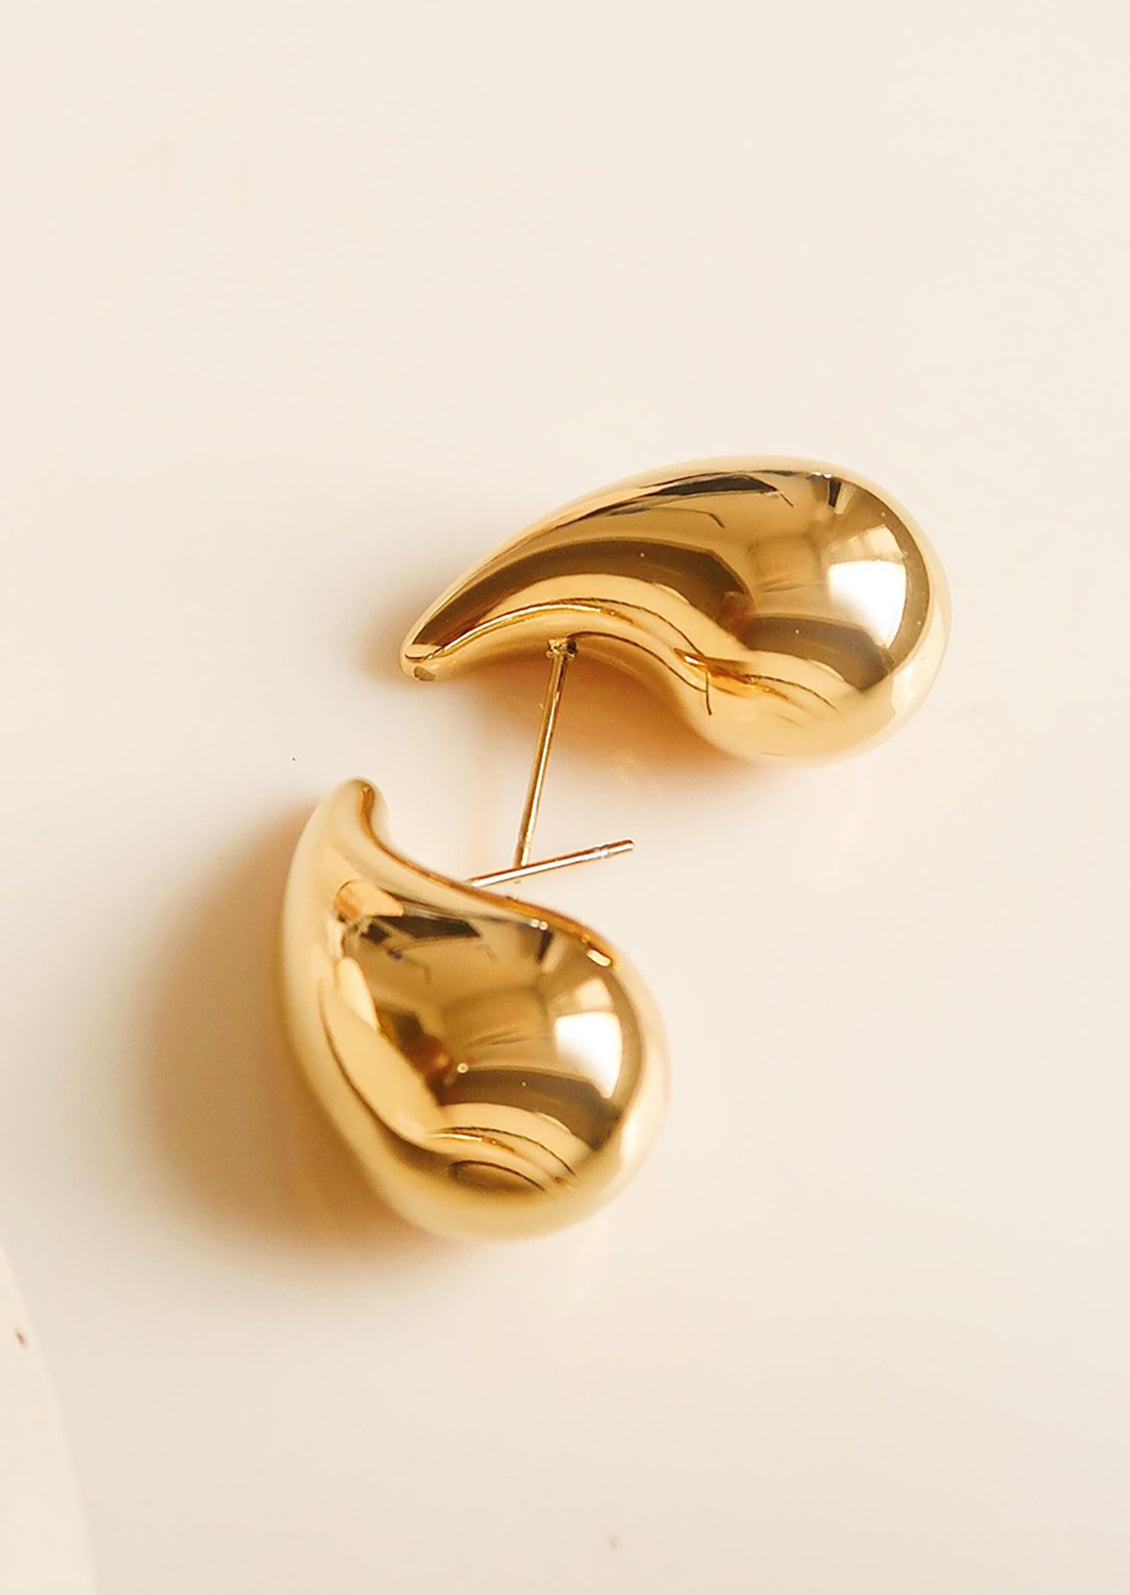 A pair of chunky, teardrop-shaped earrings in gold.